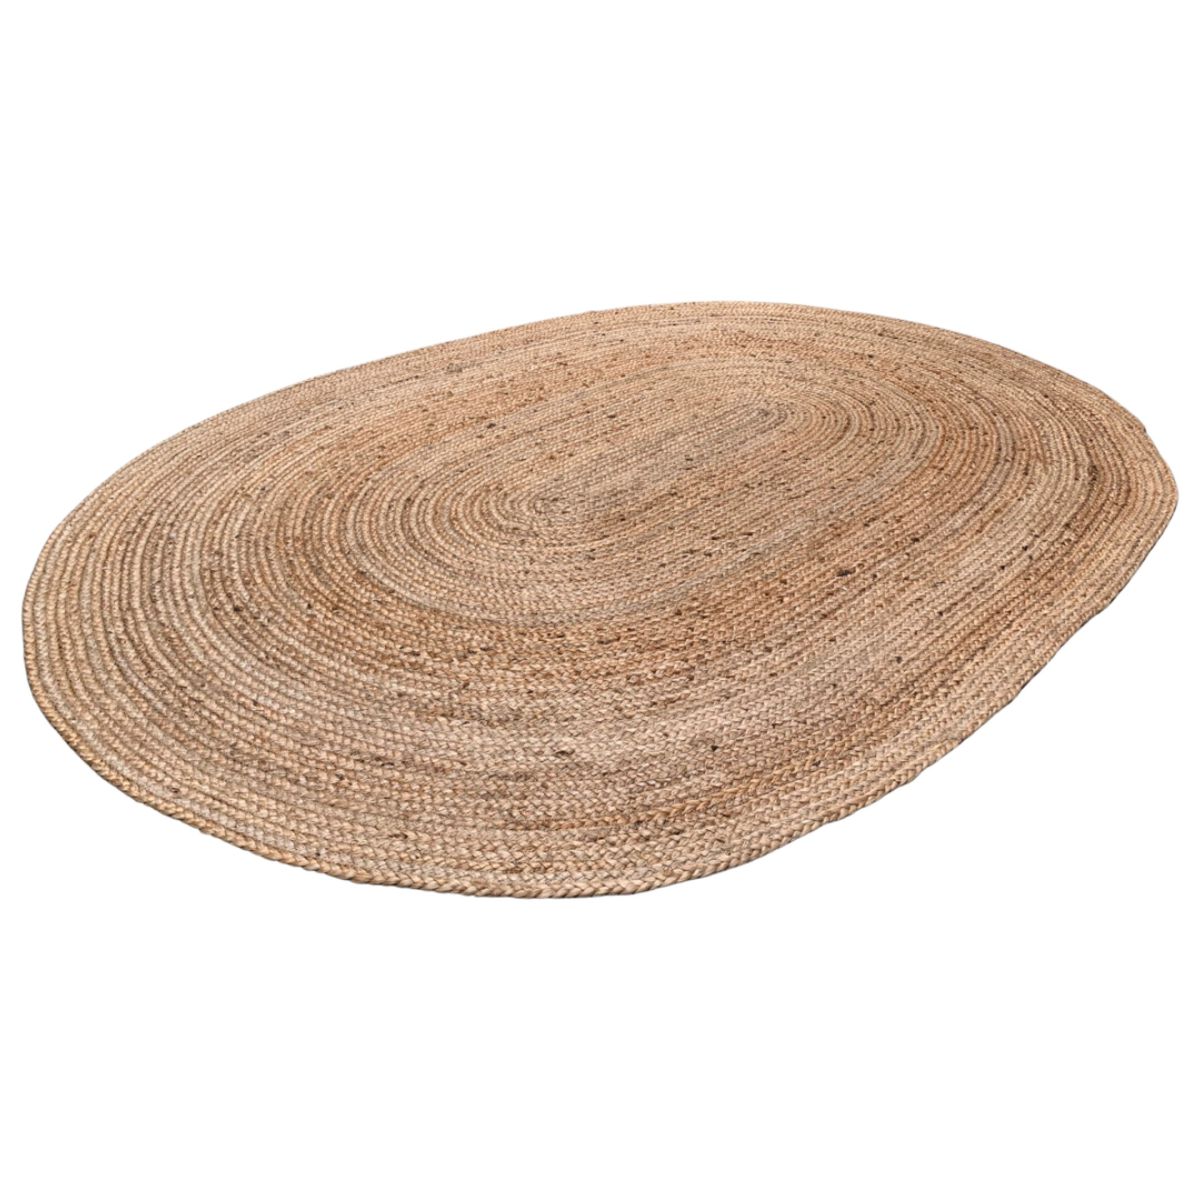 rug hemp oval 140x200cm natural brown